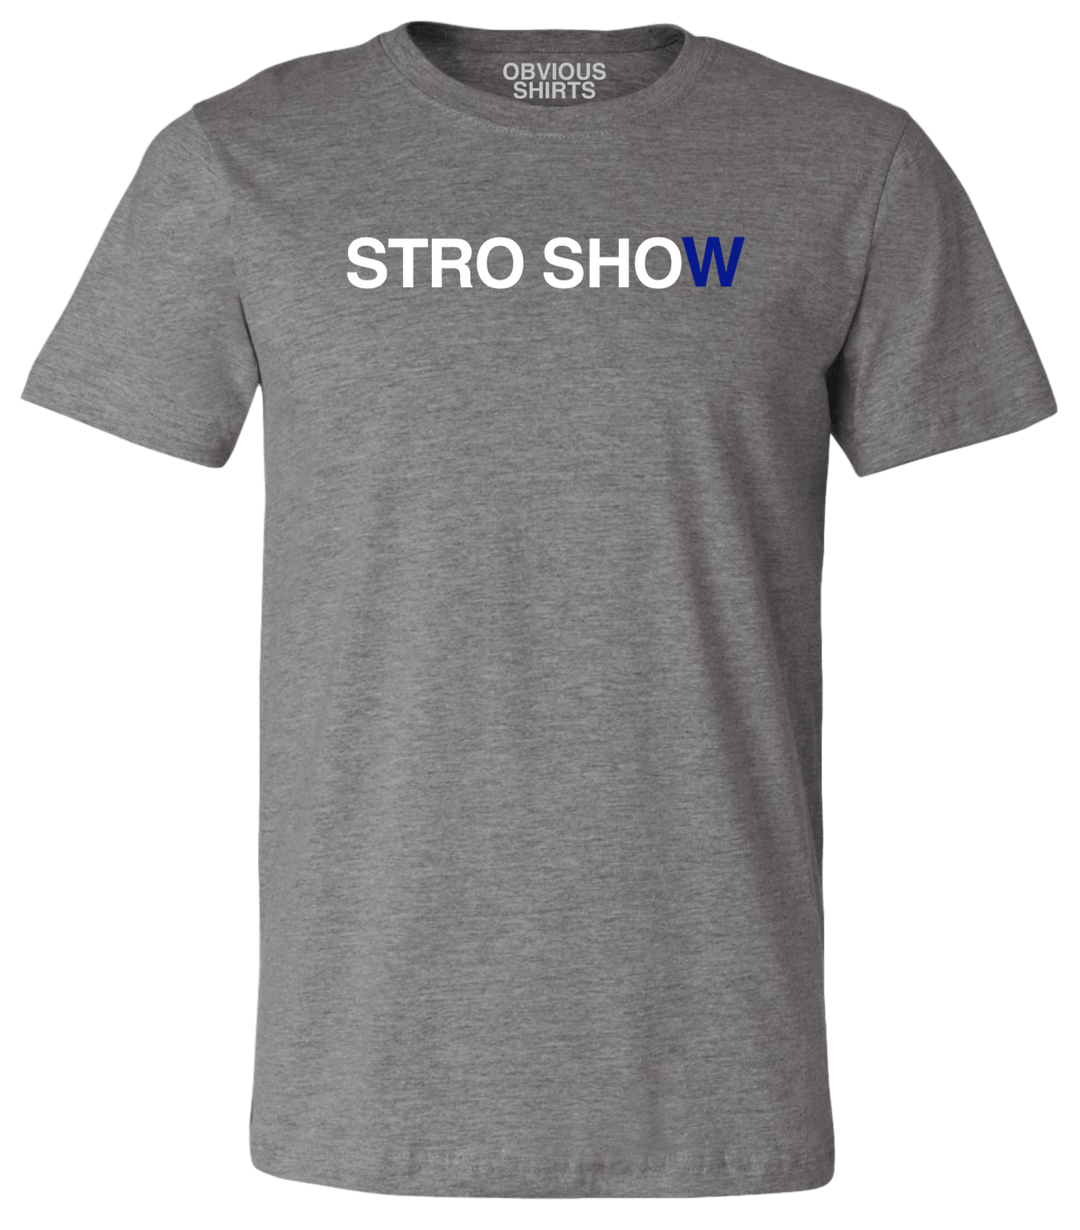 STRO SHOW - OBVIOUS SHIRTS.